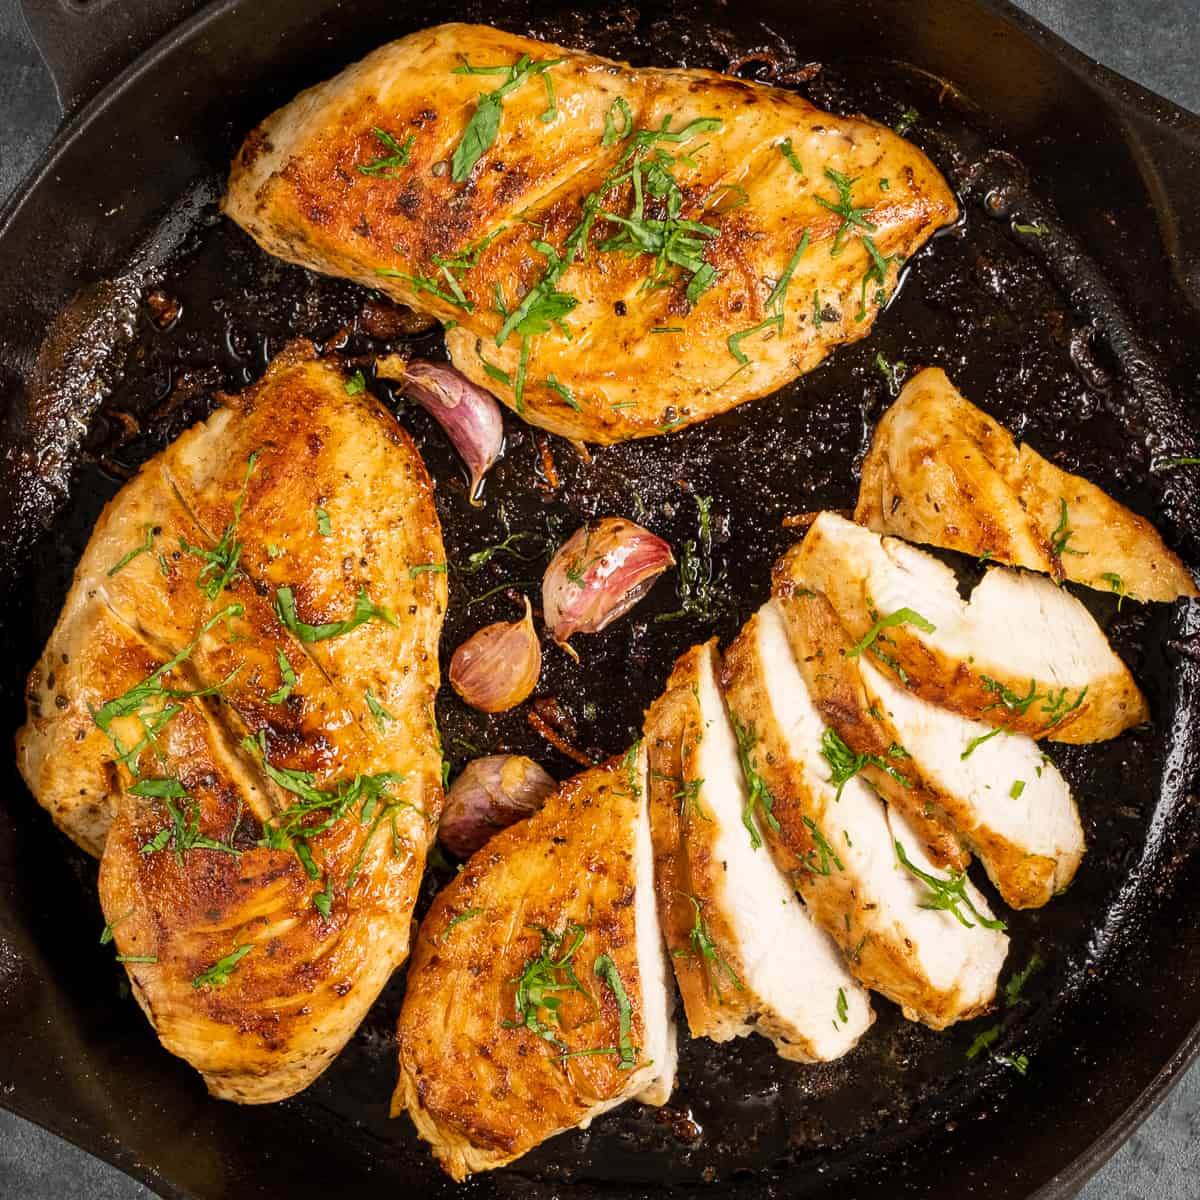 https://www.giverecipe.com/wp-content/uploads/2019/02/stove-top-chicken-breast.jpg